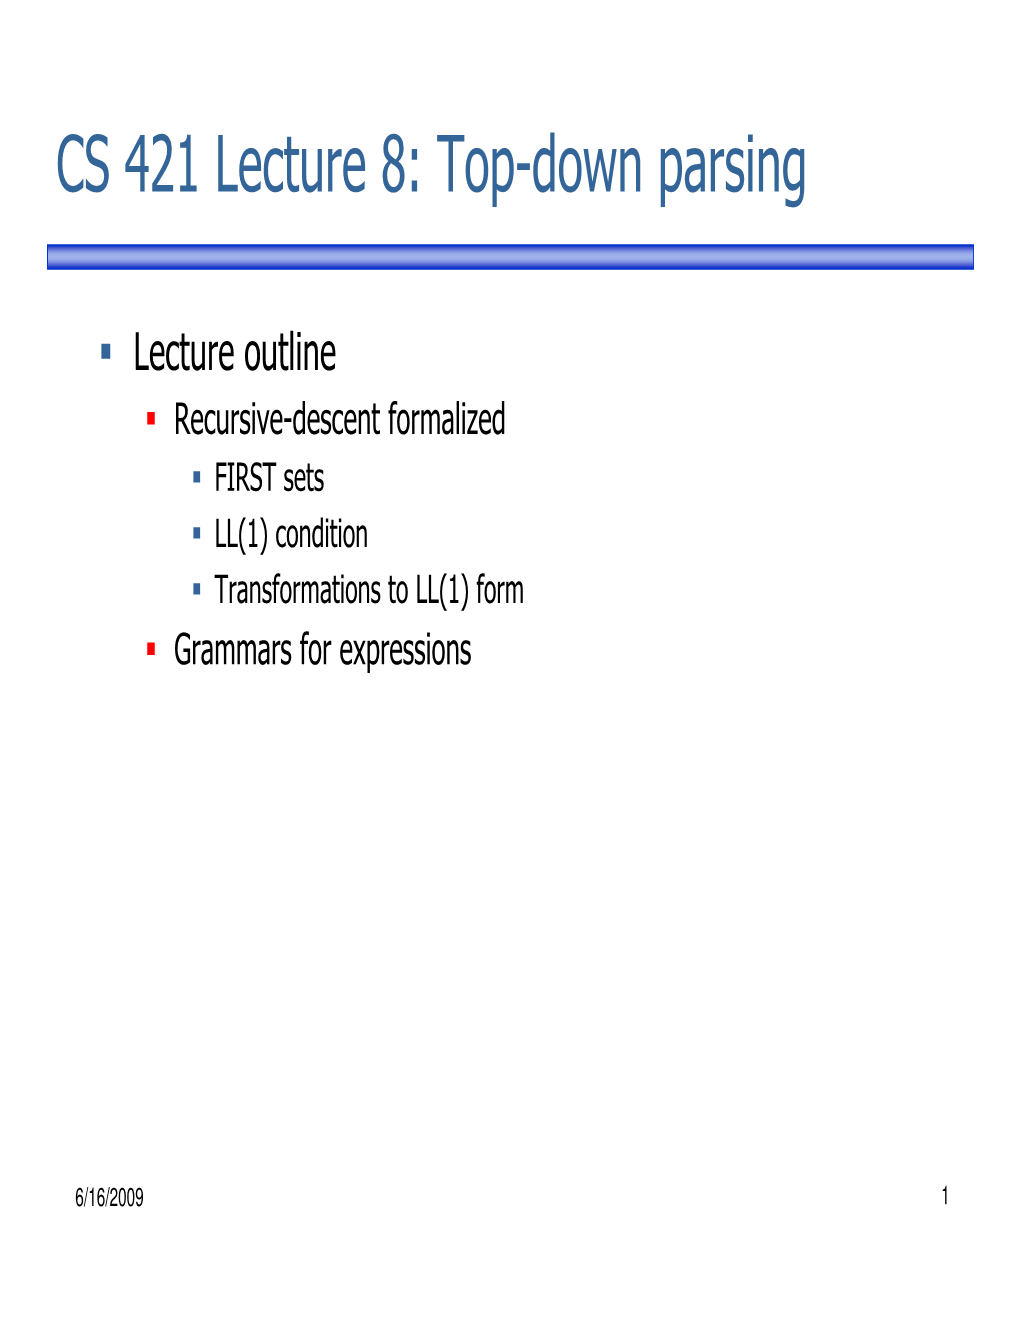 CS 421 Lecture 8: Top-Down Parsing